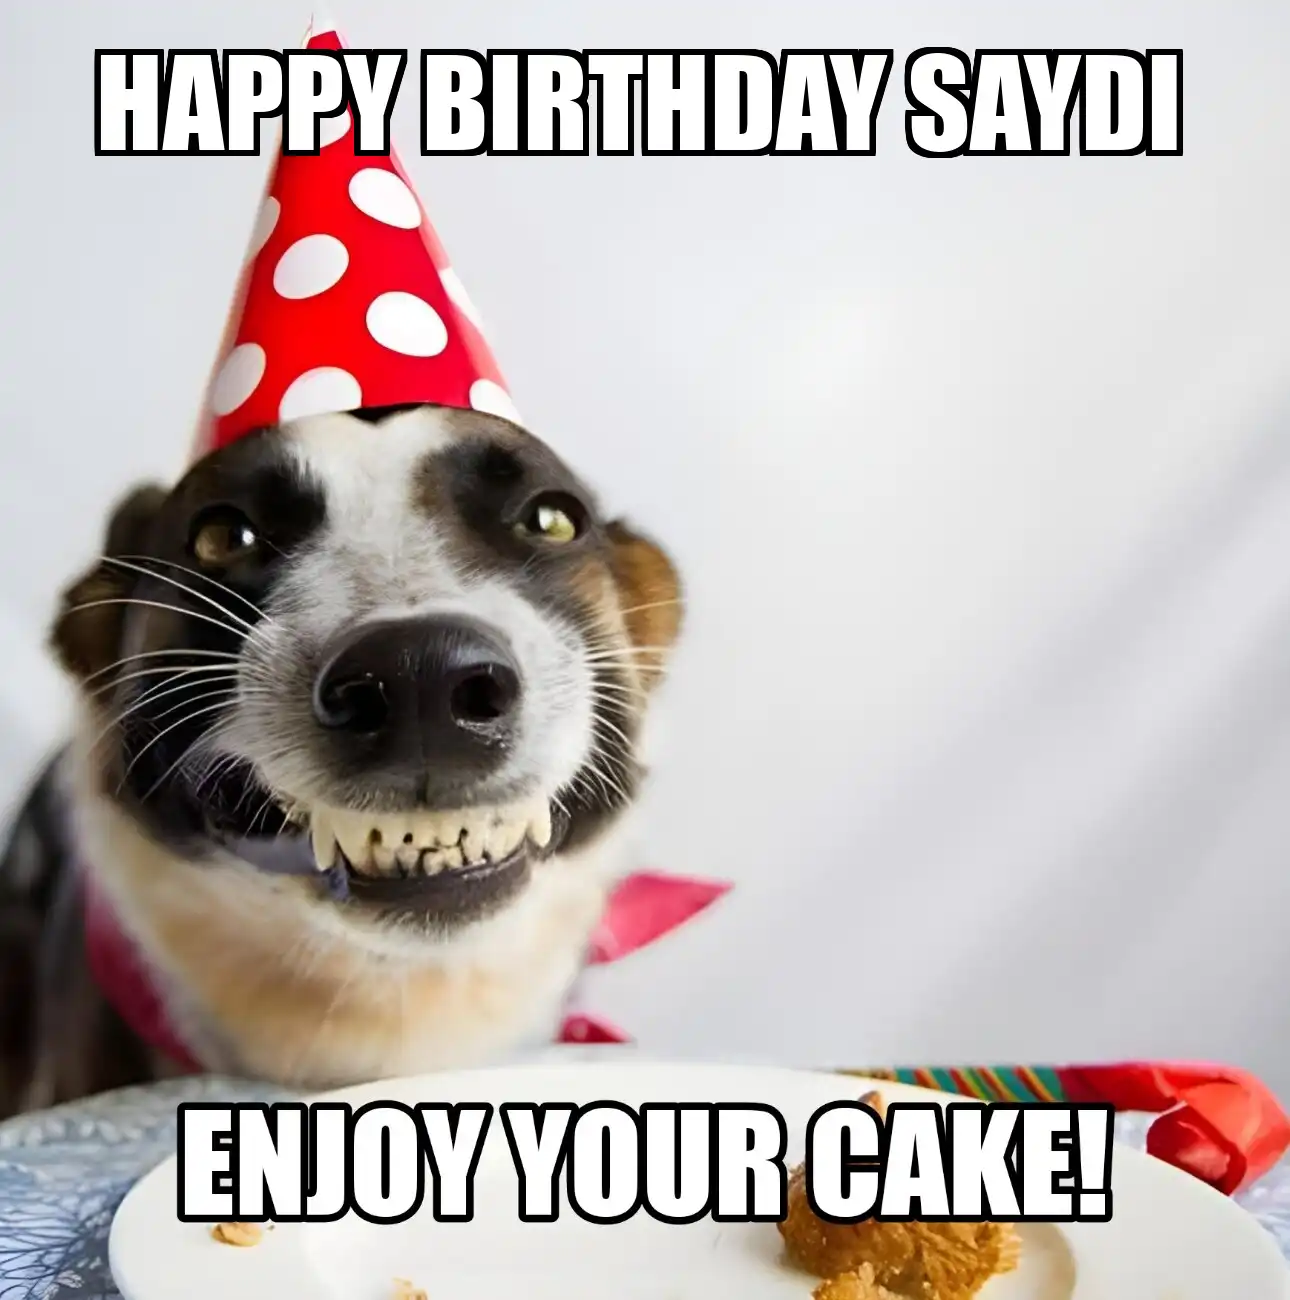 Happy Birthday Saydi Enjoy Your Cake Dog Meme